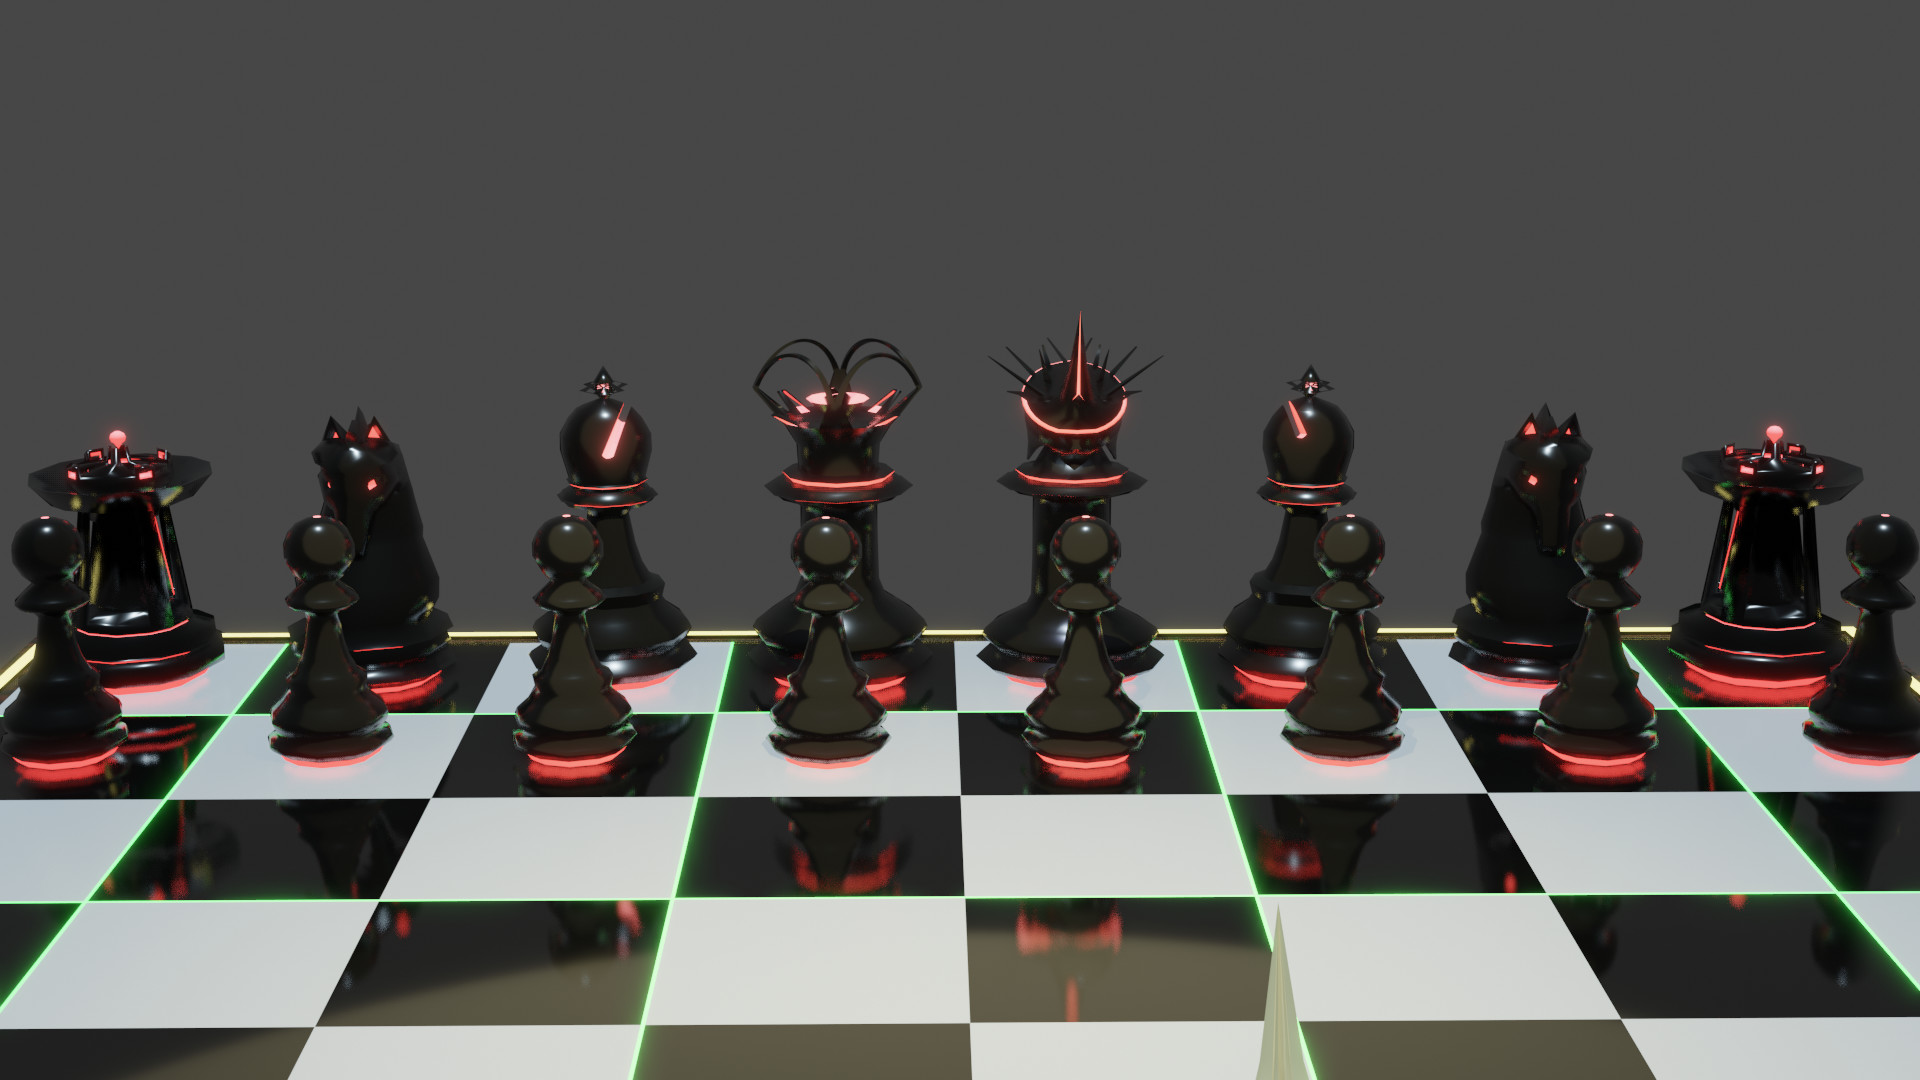 Rook chess piece - Show - GameDev.tv